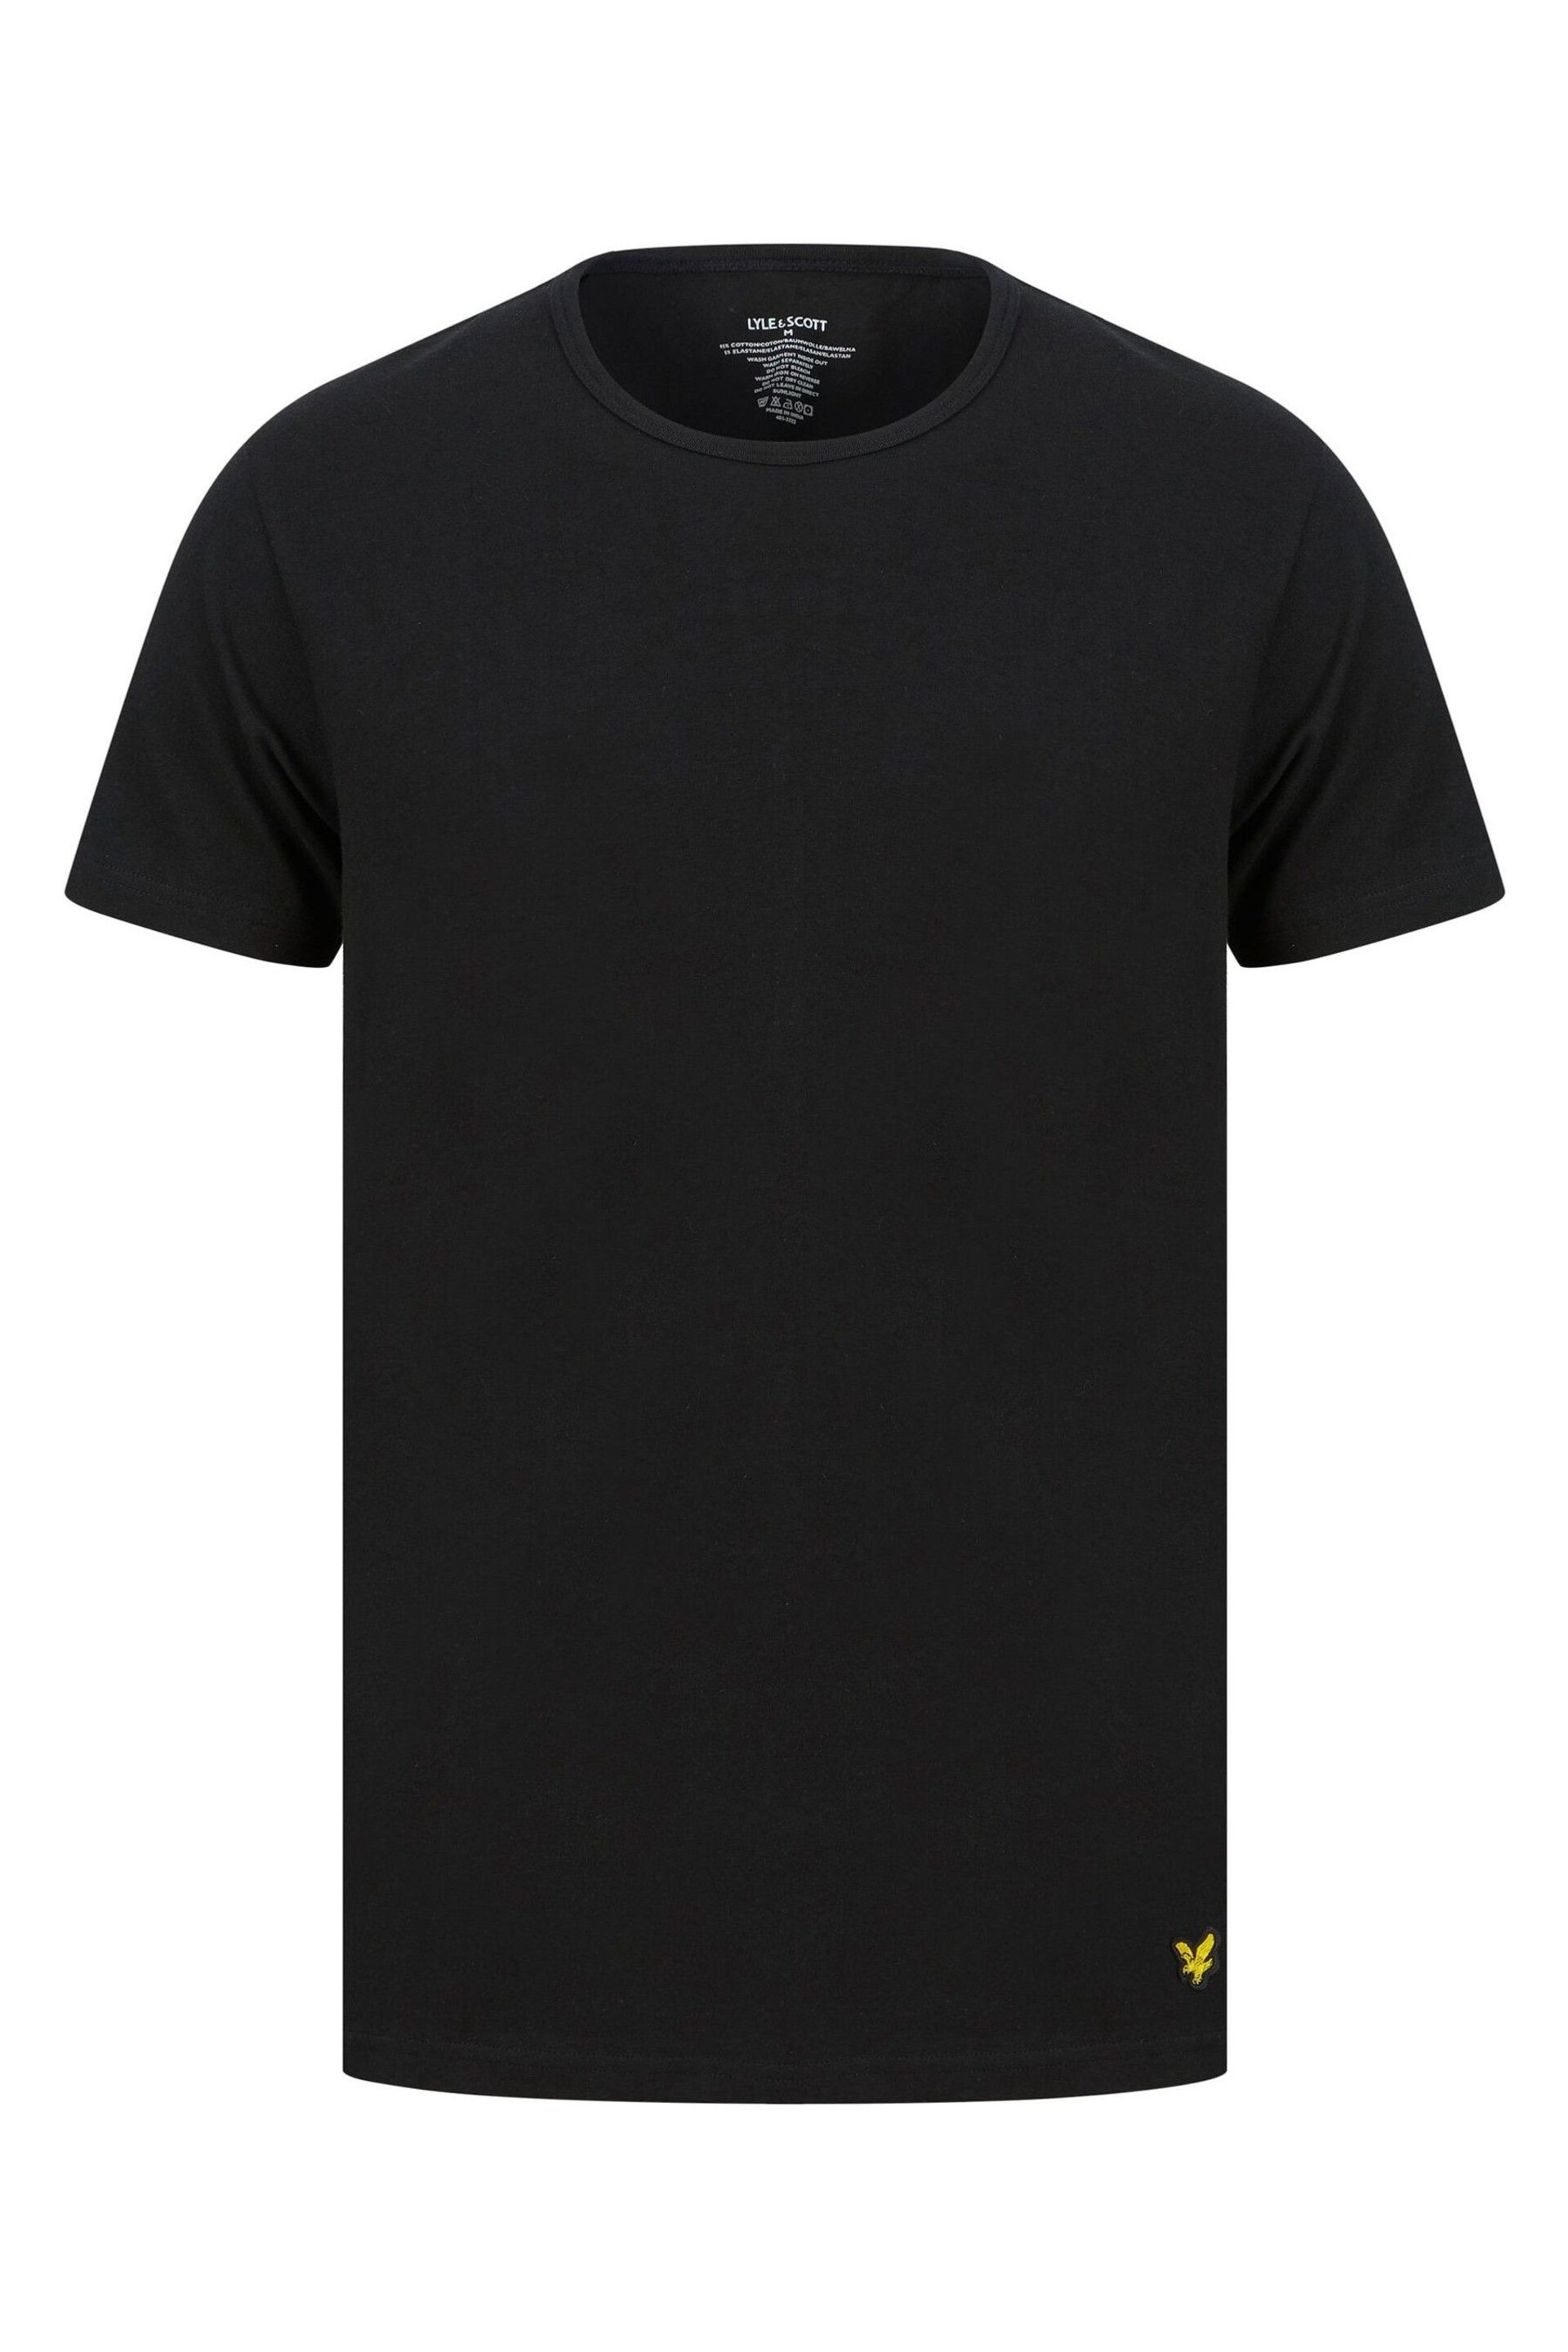 Lyle & Scott August Black Loungewear T-Shirts 3 Pack - Image 4 of 5